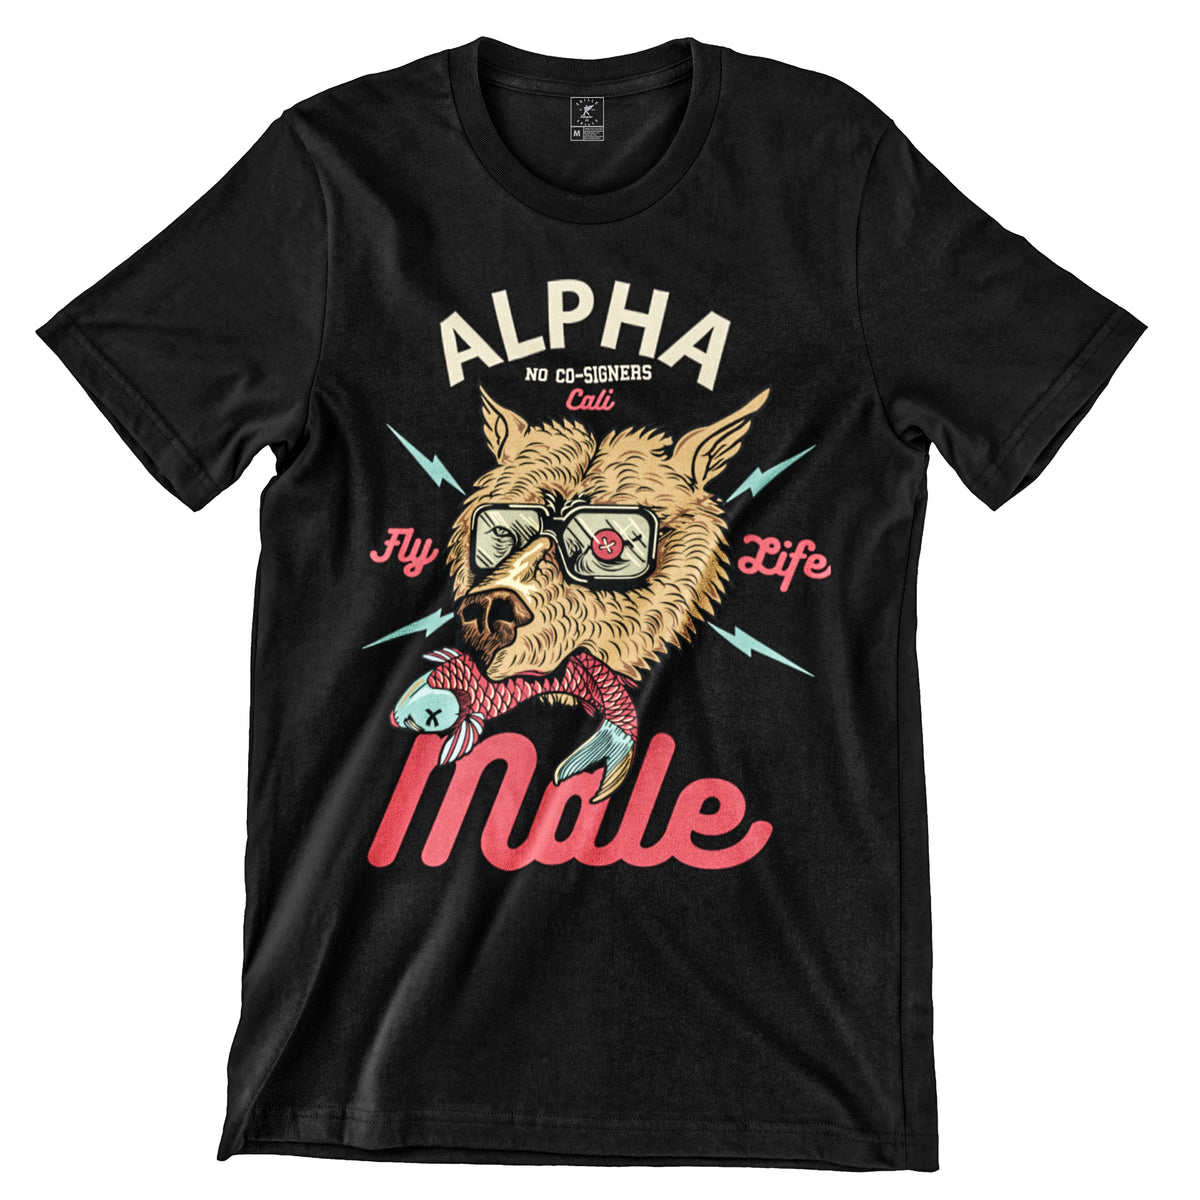 "Alpha Male BLK" Tee